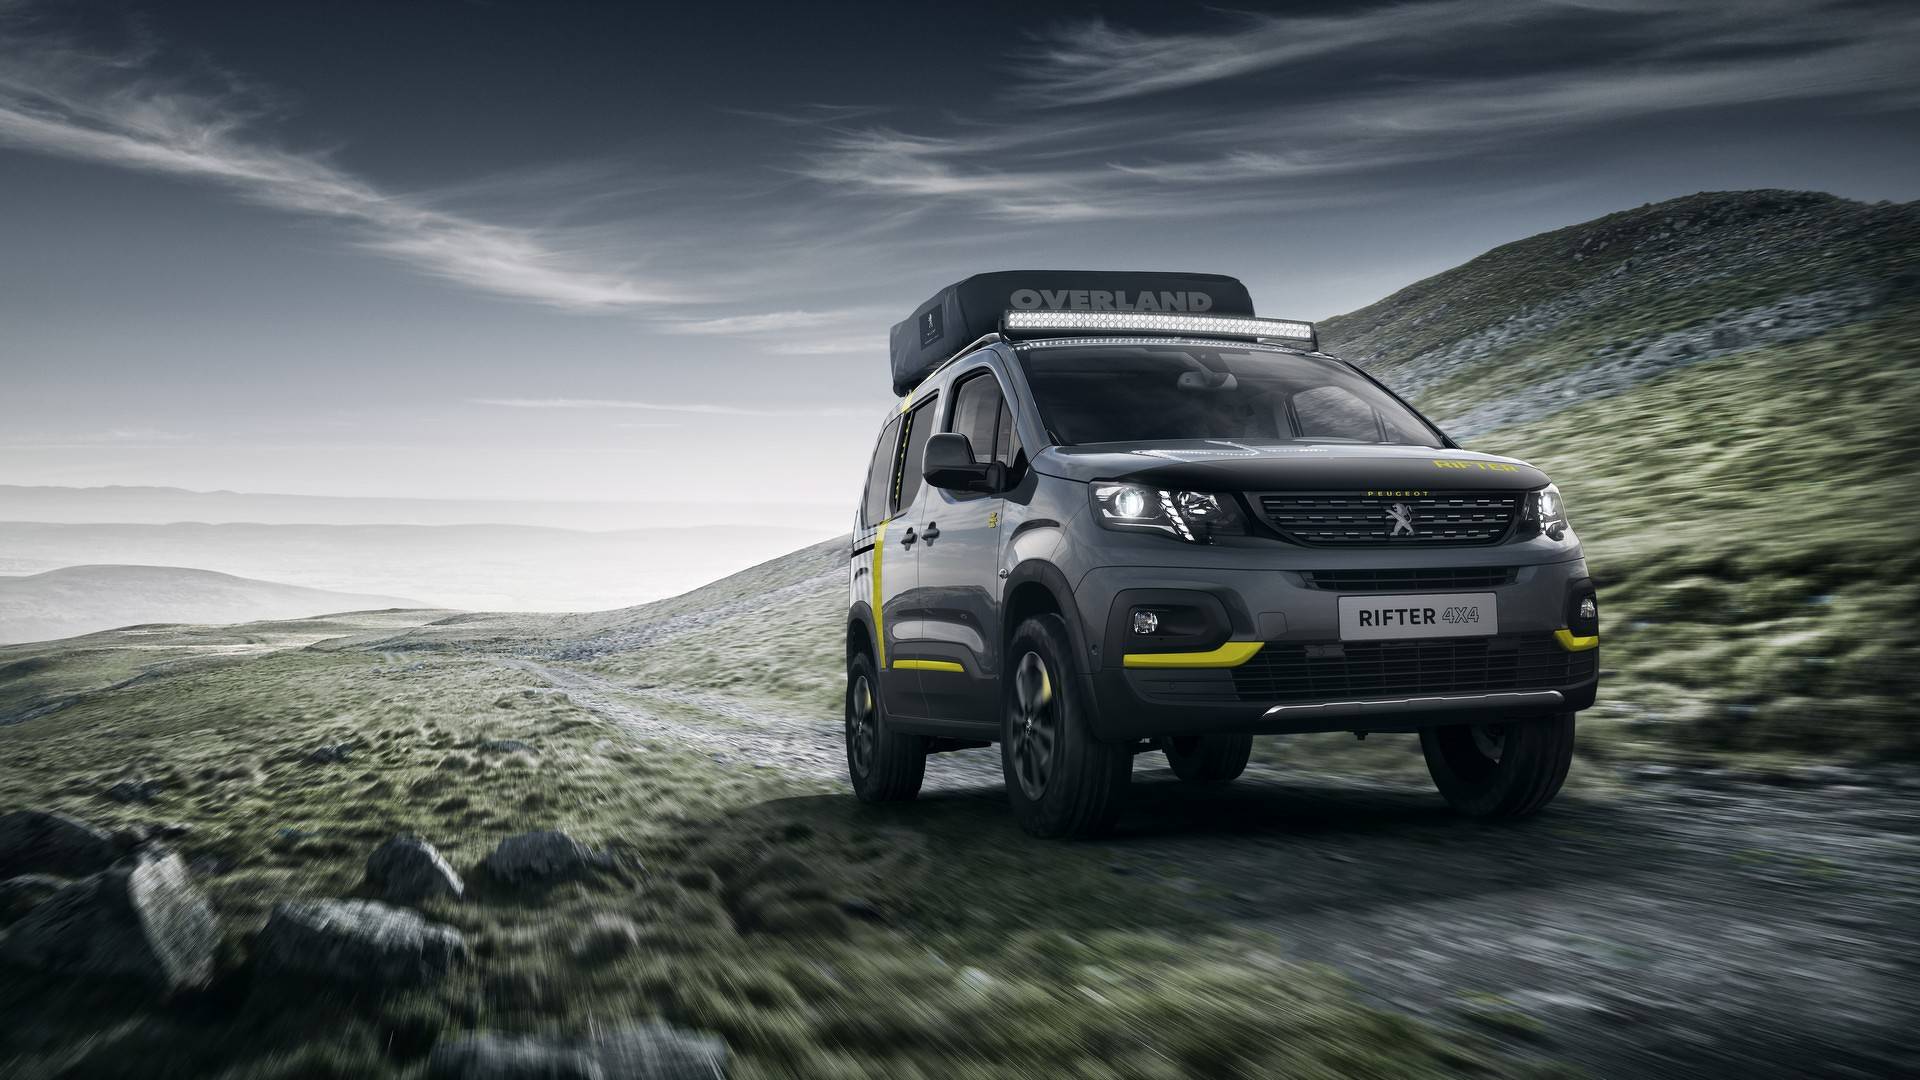 Peugeot Rifter 4×4 Concept: Στην περιπετειώδη πλευρά των vans